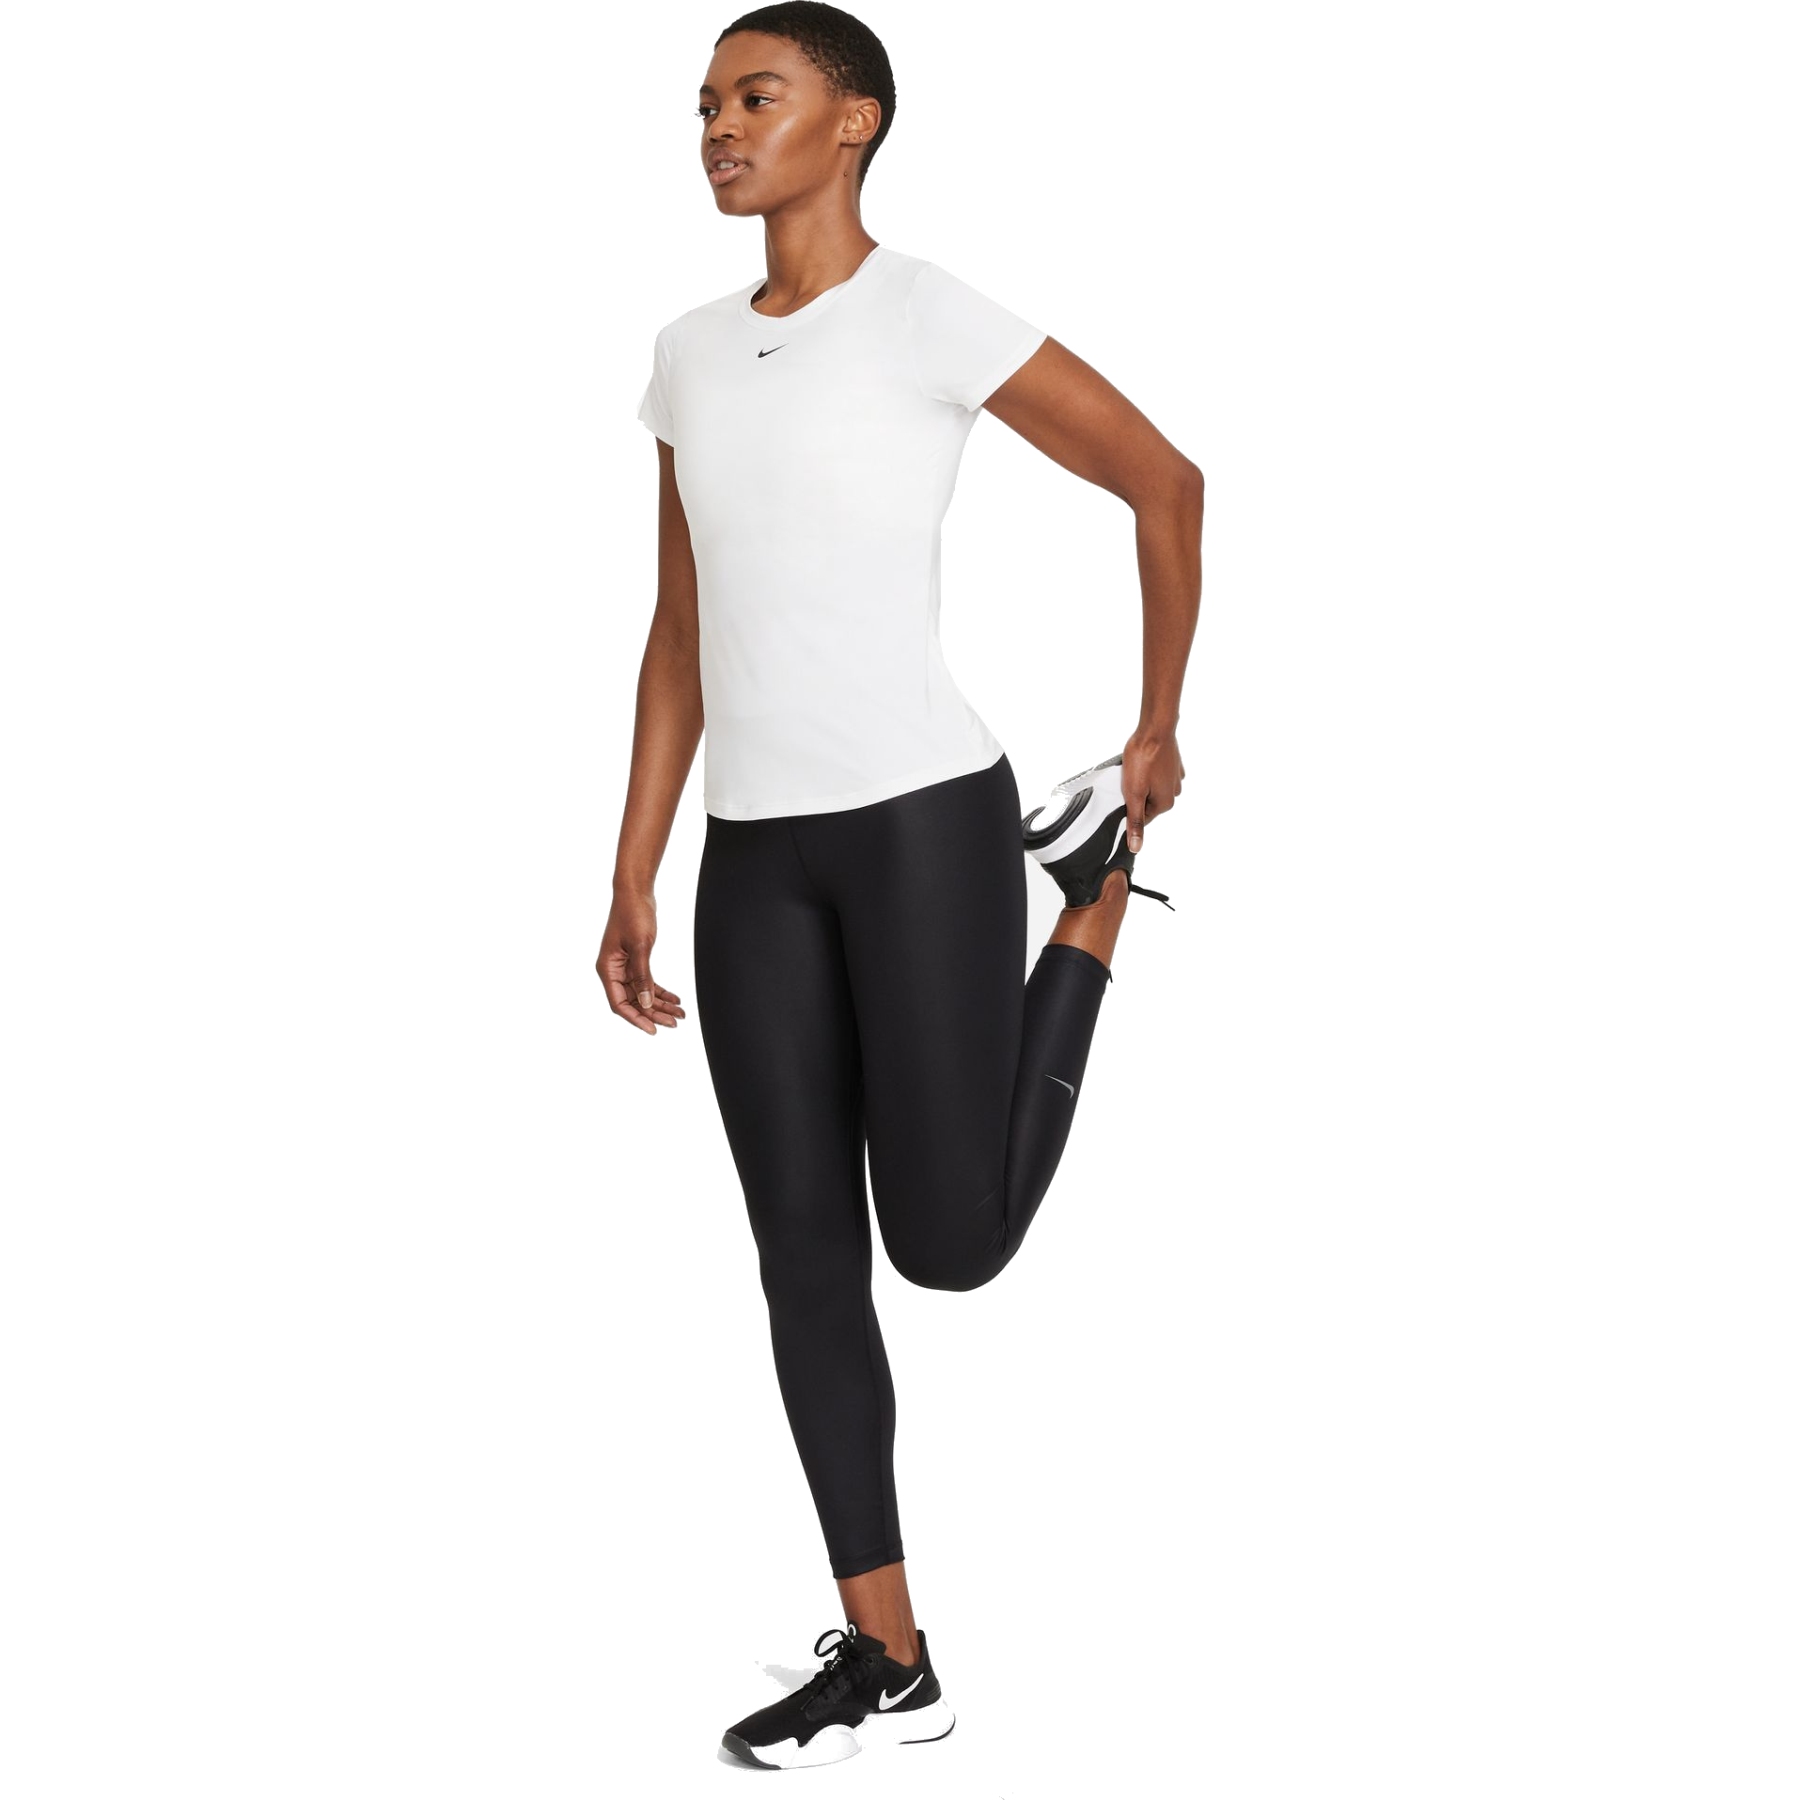 Nike Dri-FIT One Slim Fit Short-Sleeve Top Women - white/black